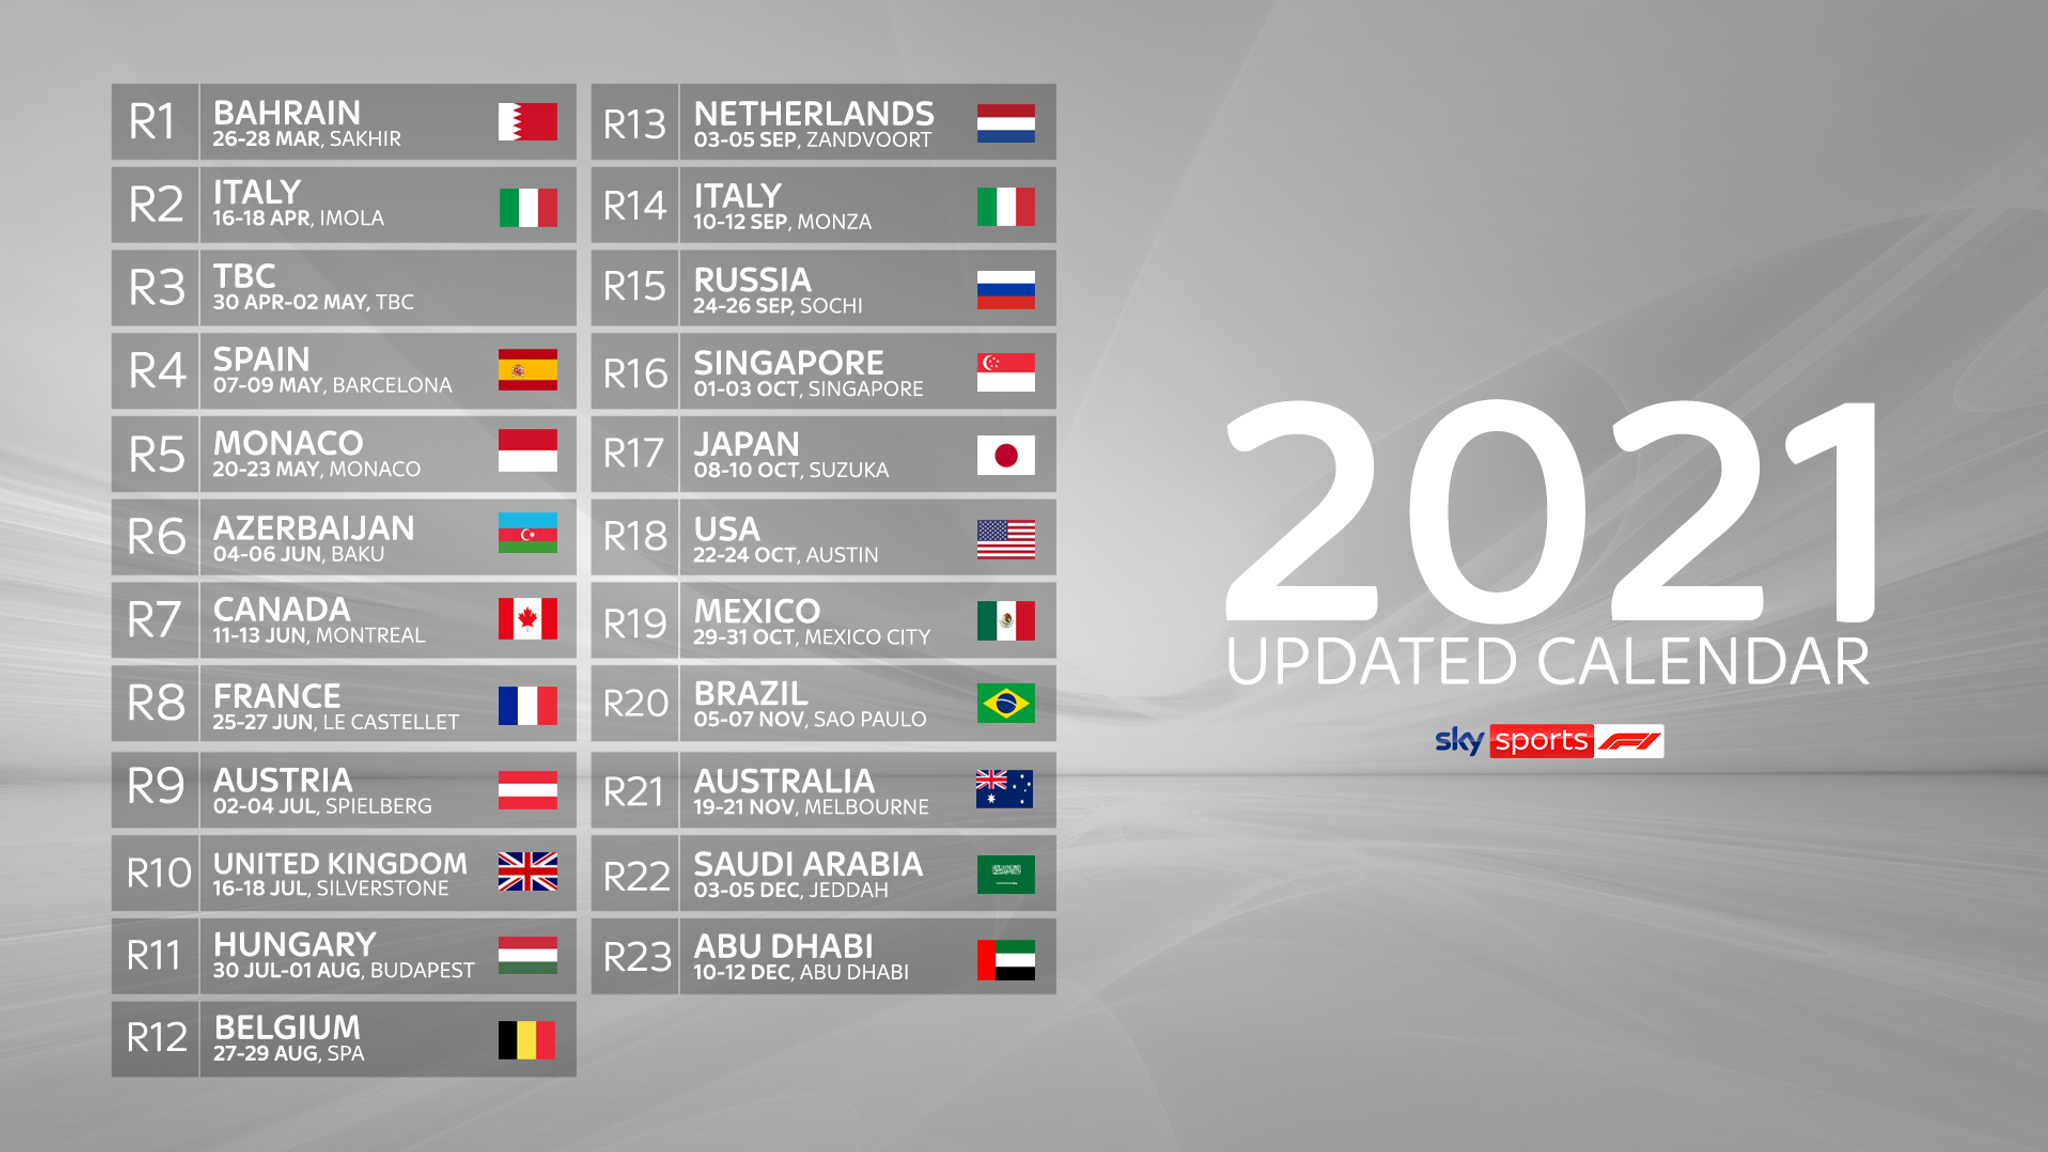 F1 Calendar 2021 Ical Formula 1 In 2021 Revised Calendar For Record 23 Race Season Revealed F1 News